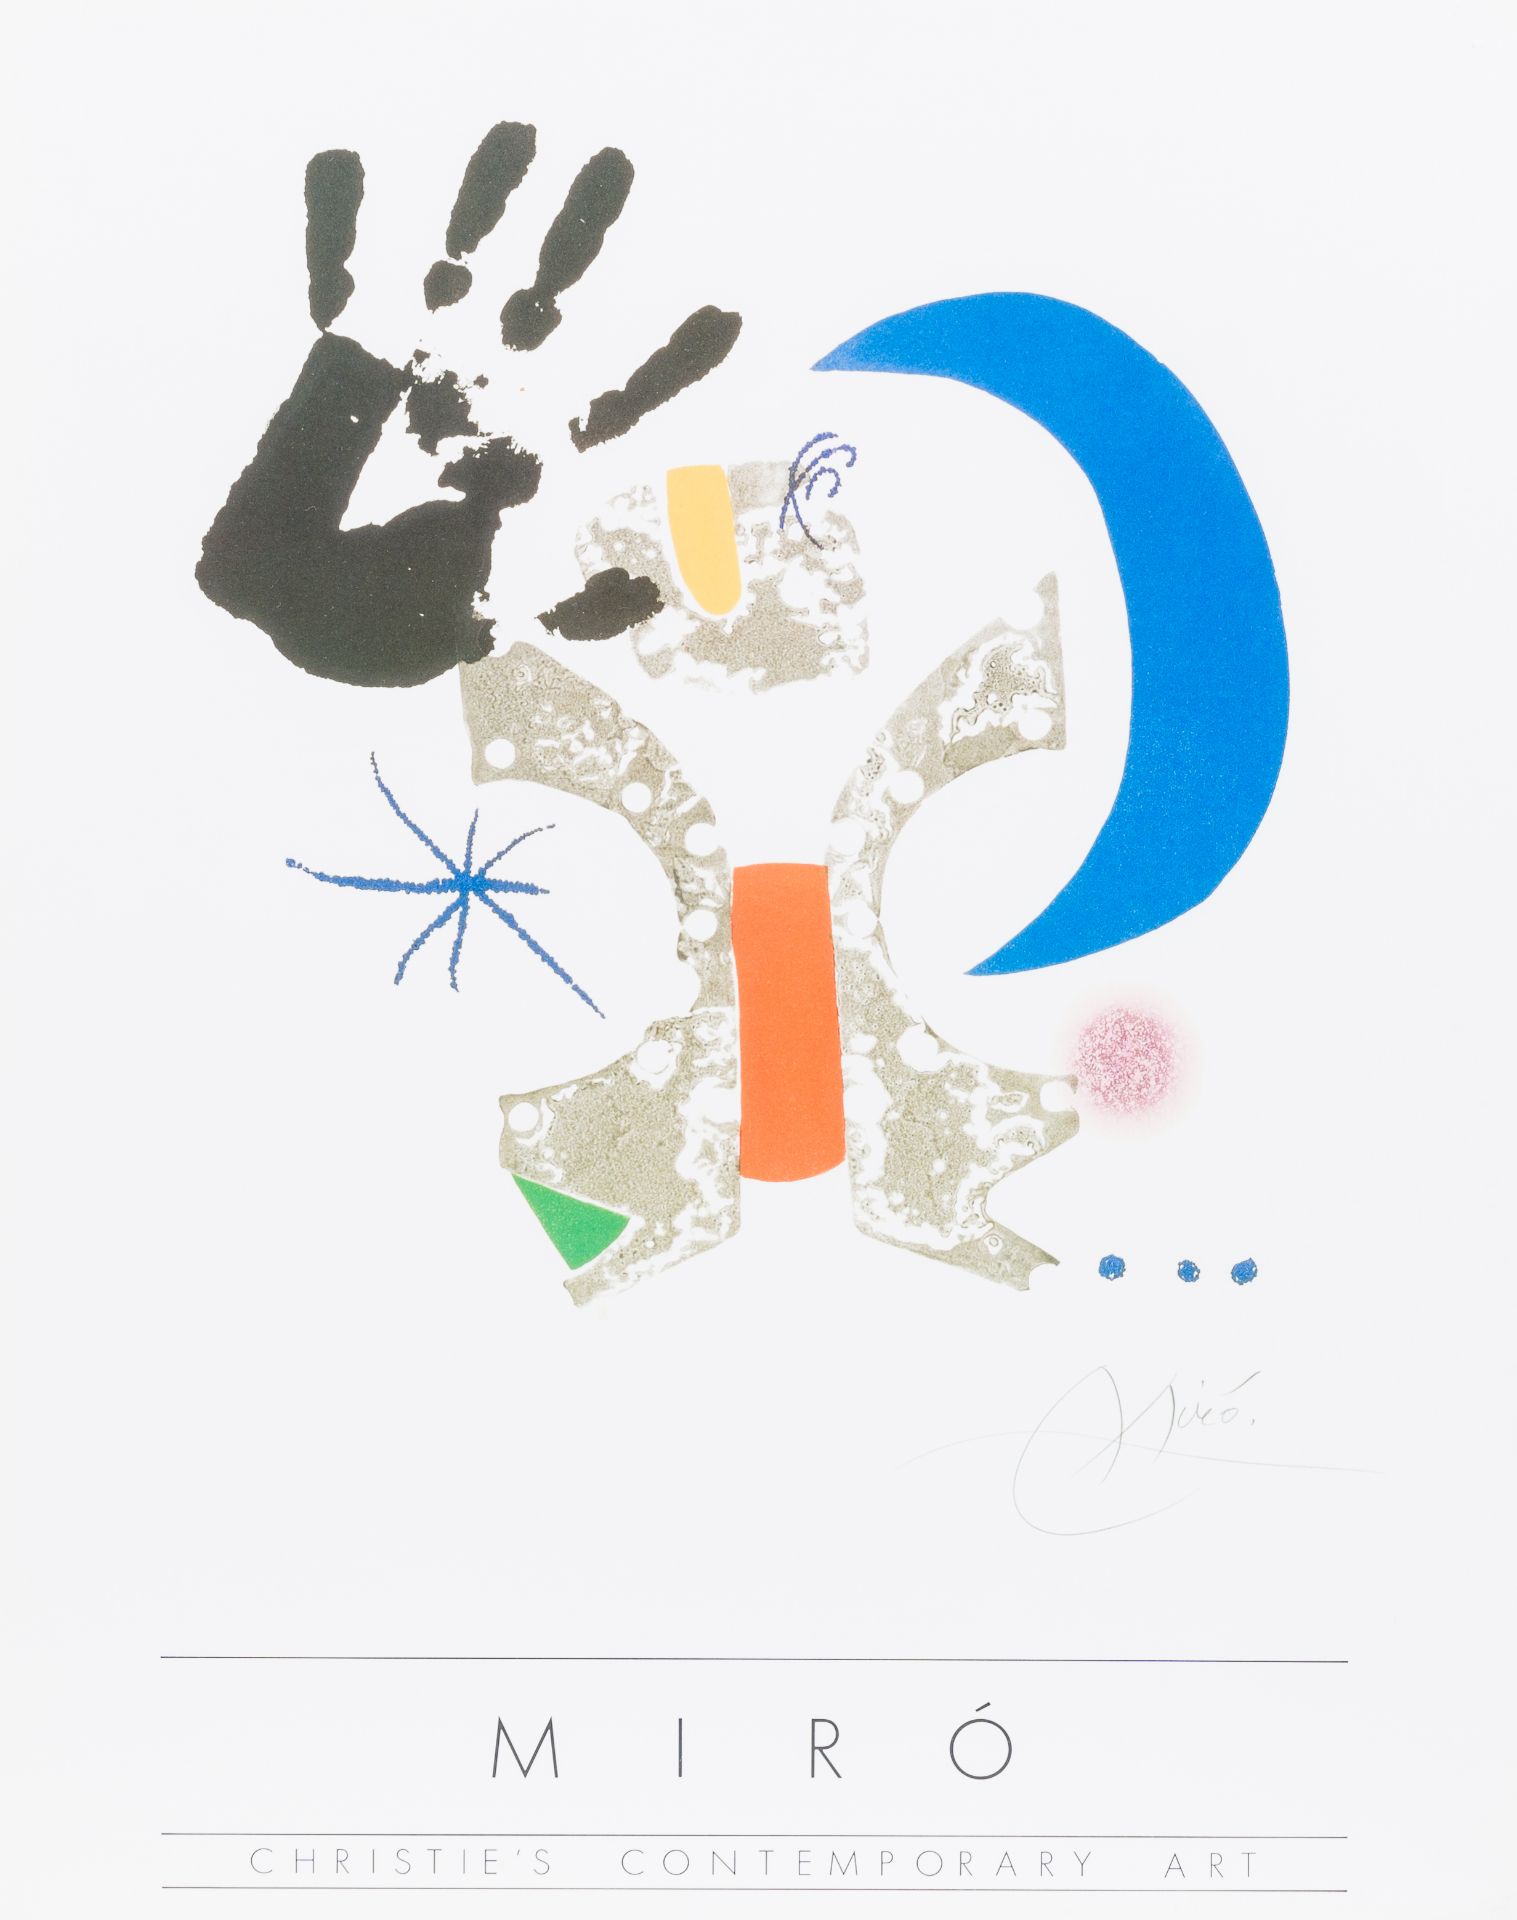 Joan Miro (1893-1983): 'Christie's Contemporary Art', poster